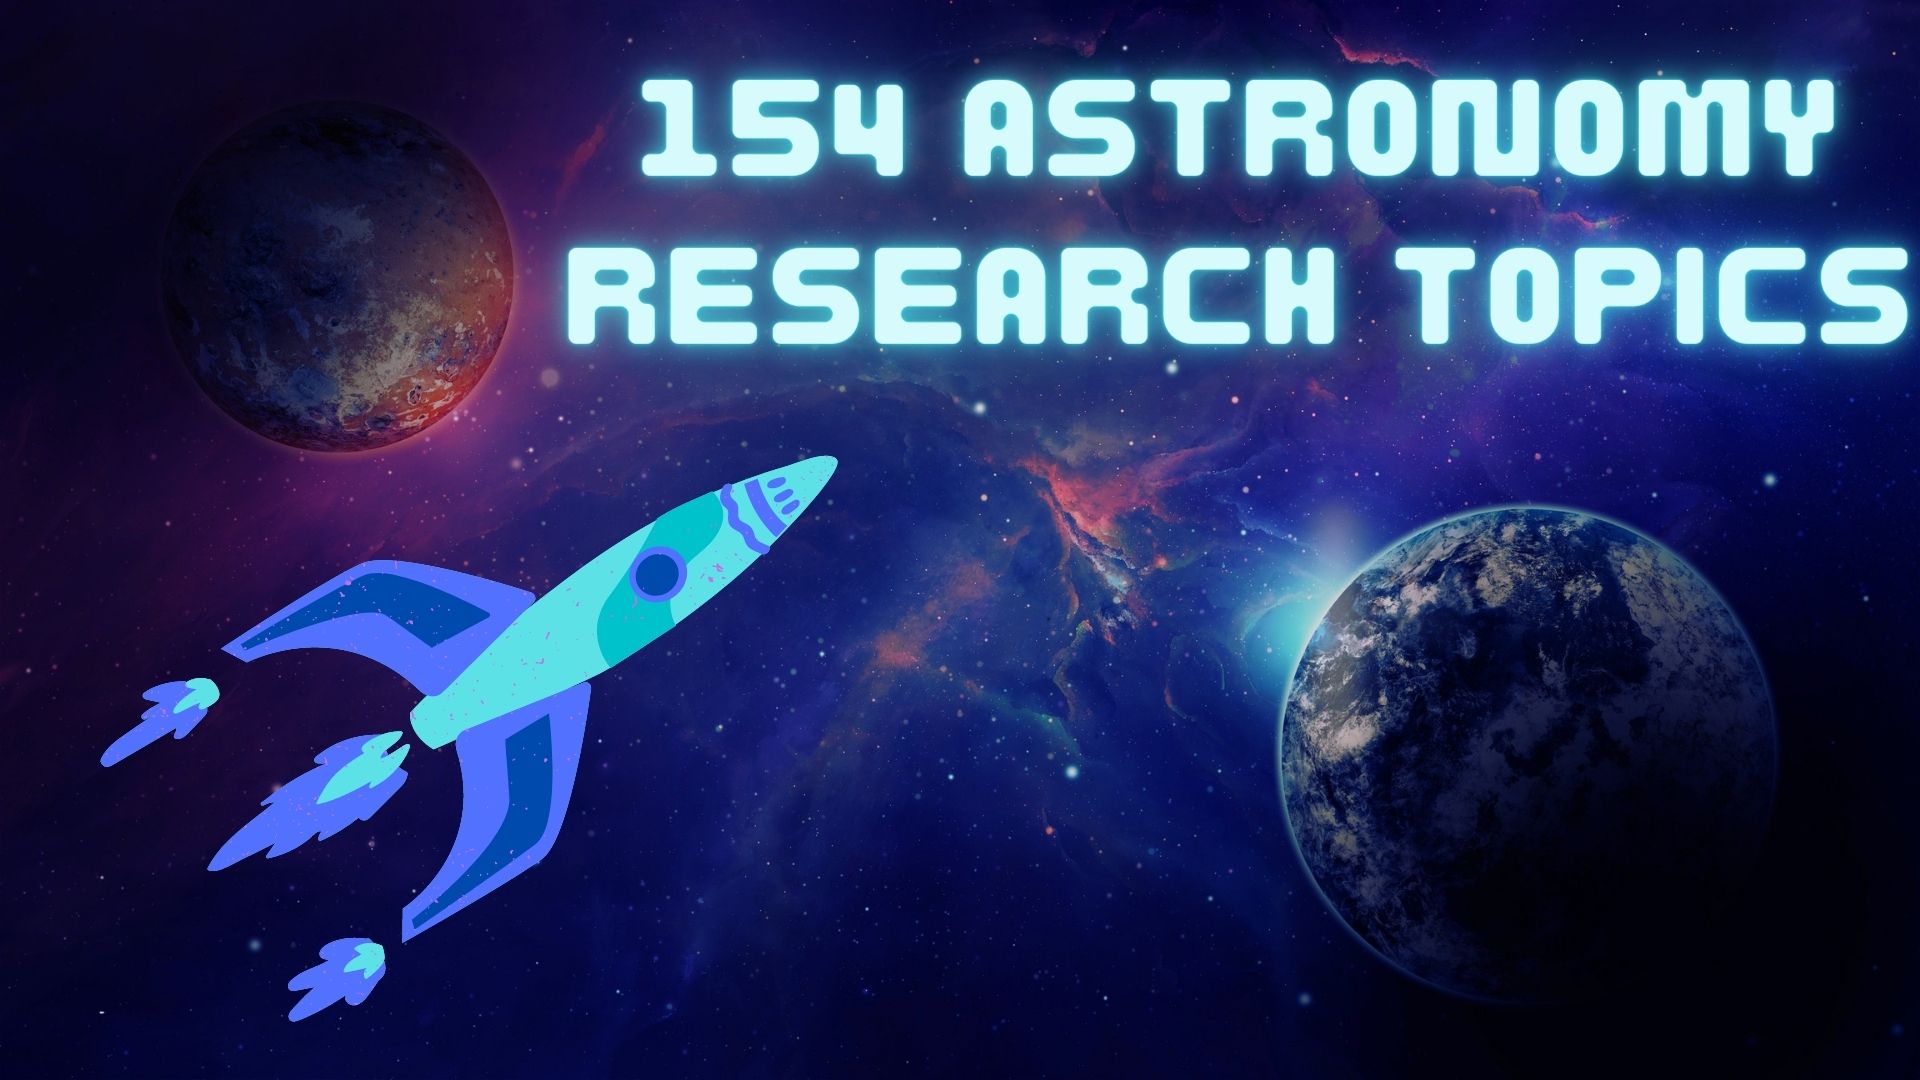 154 Astronomy Research Topics